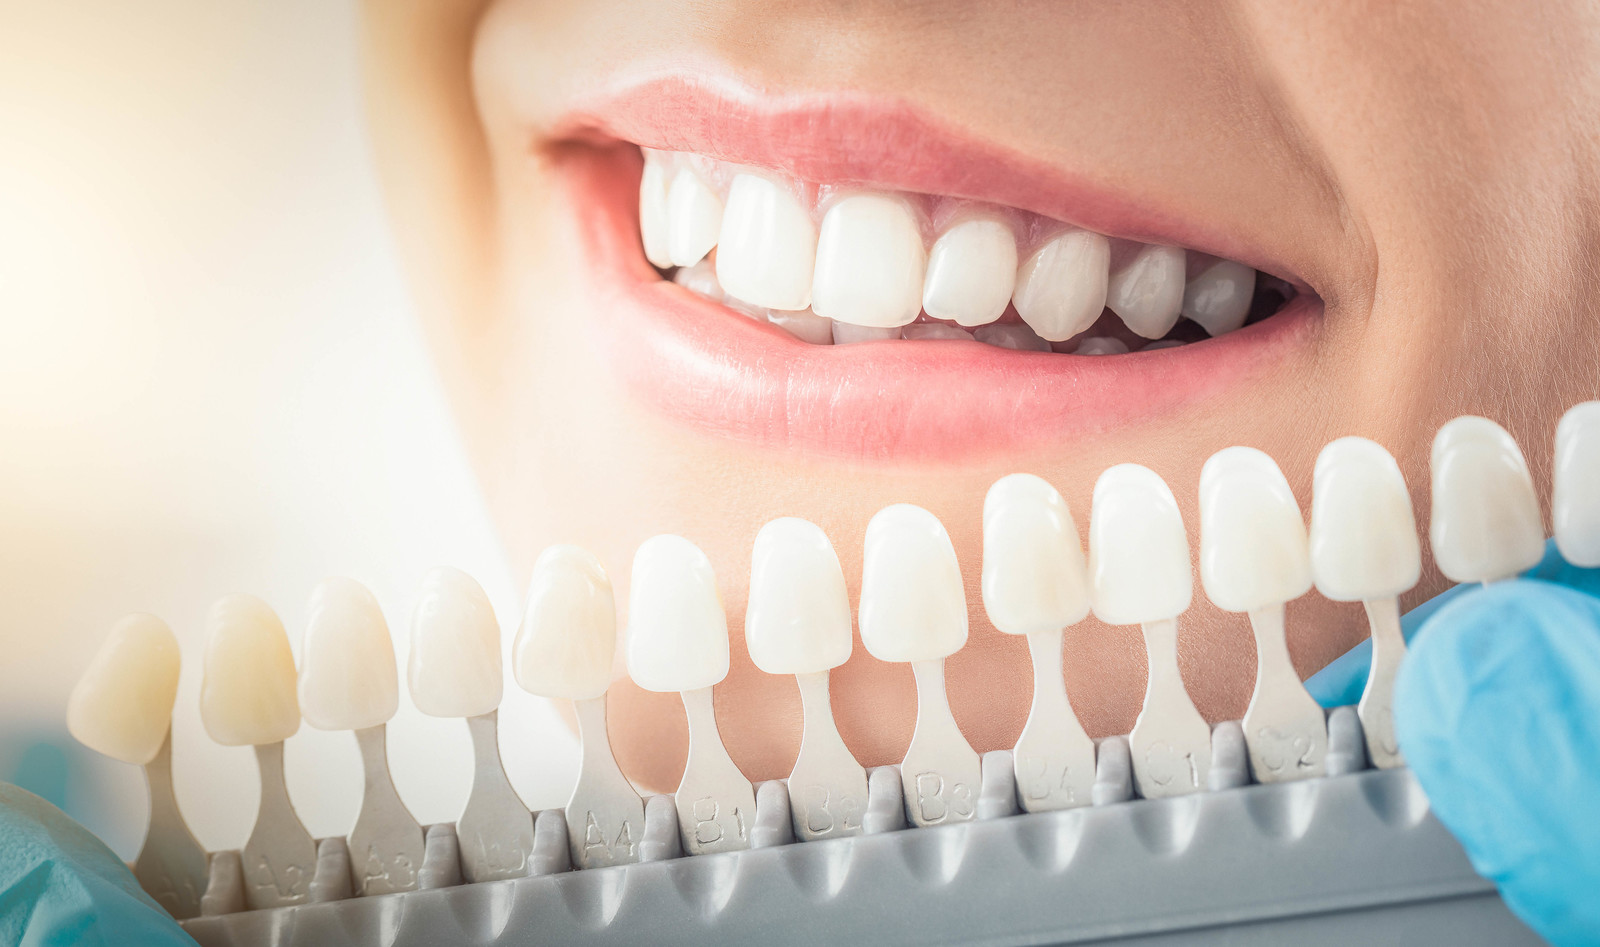 cosmetic teeth whitening industry